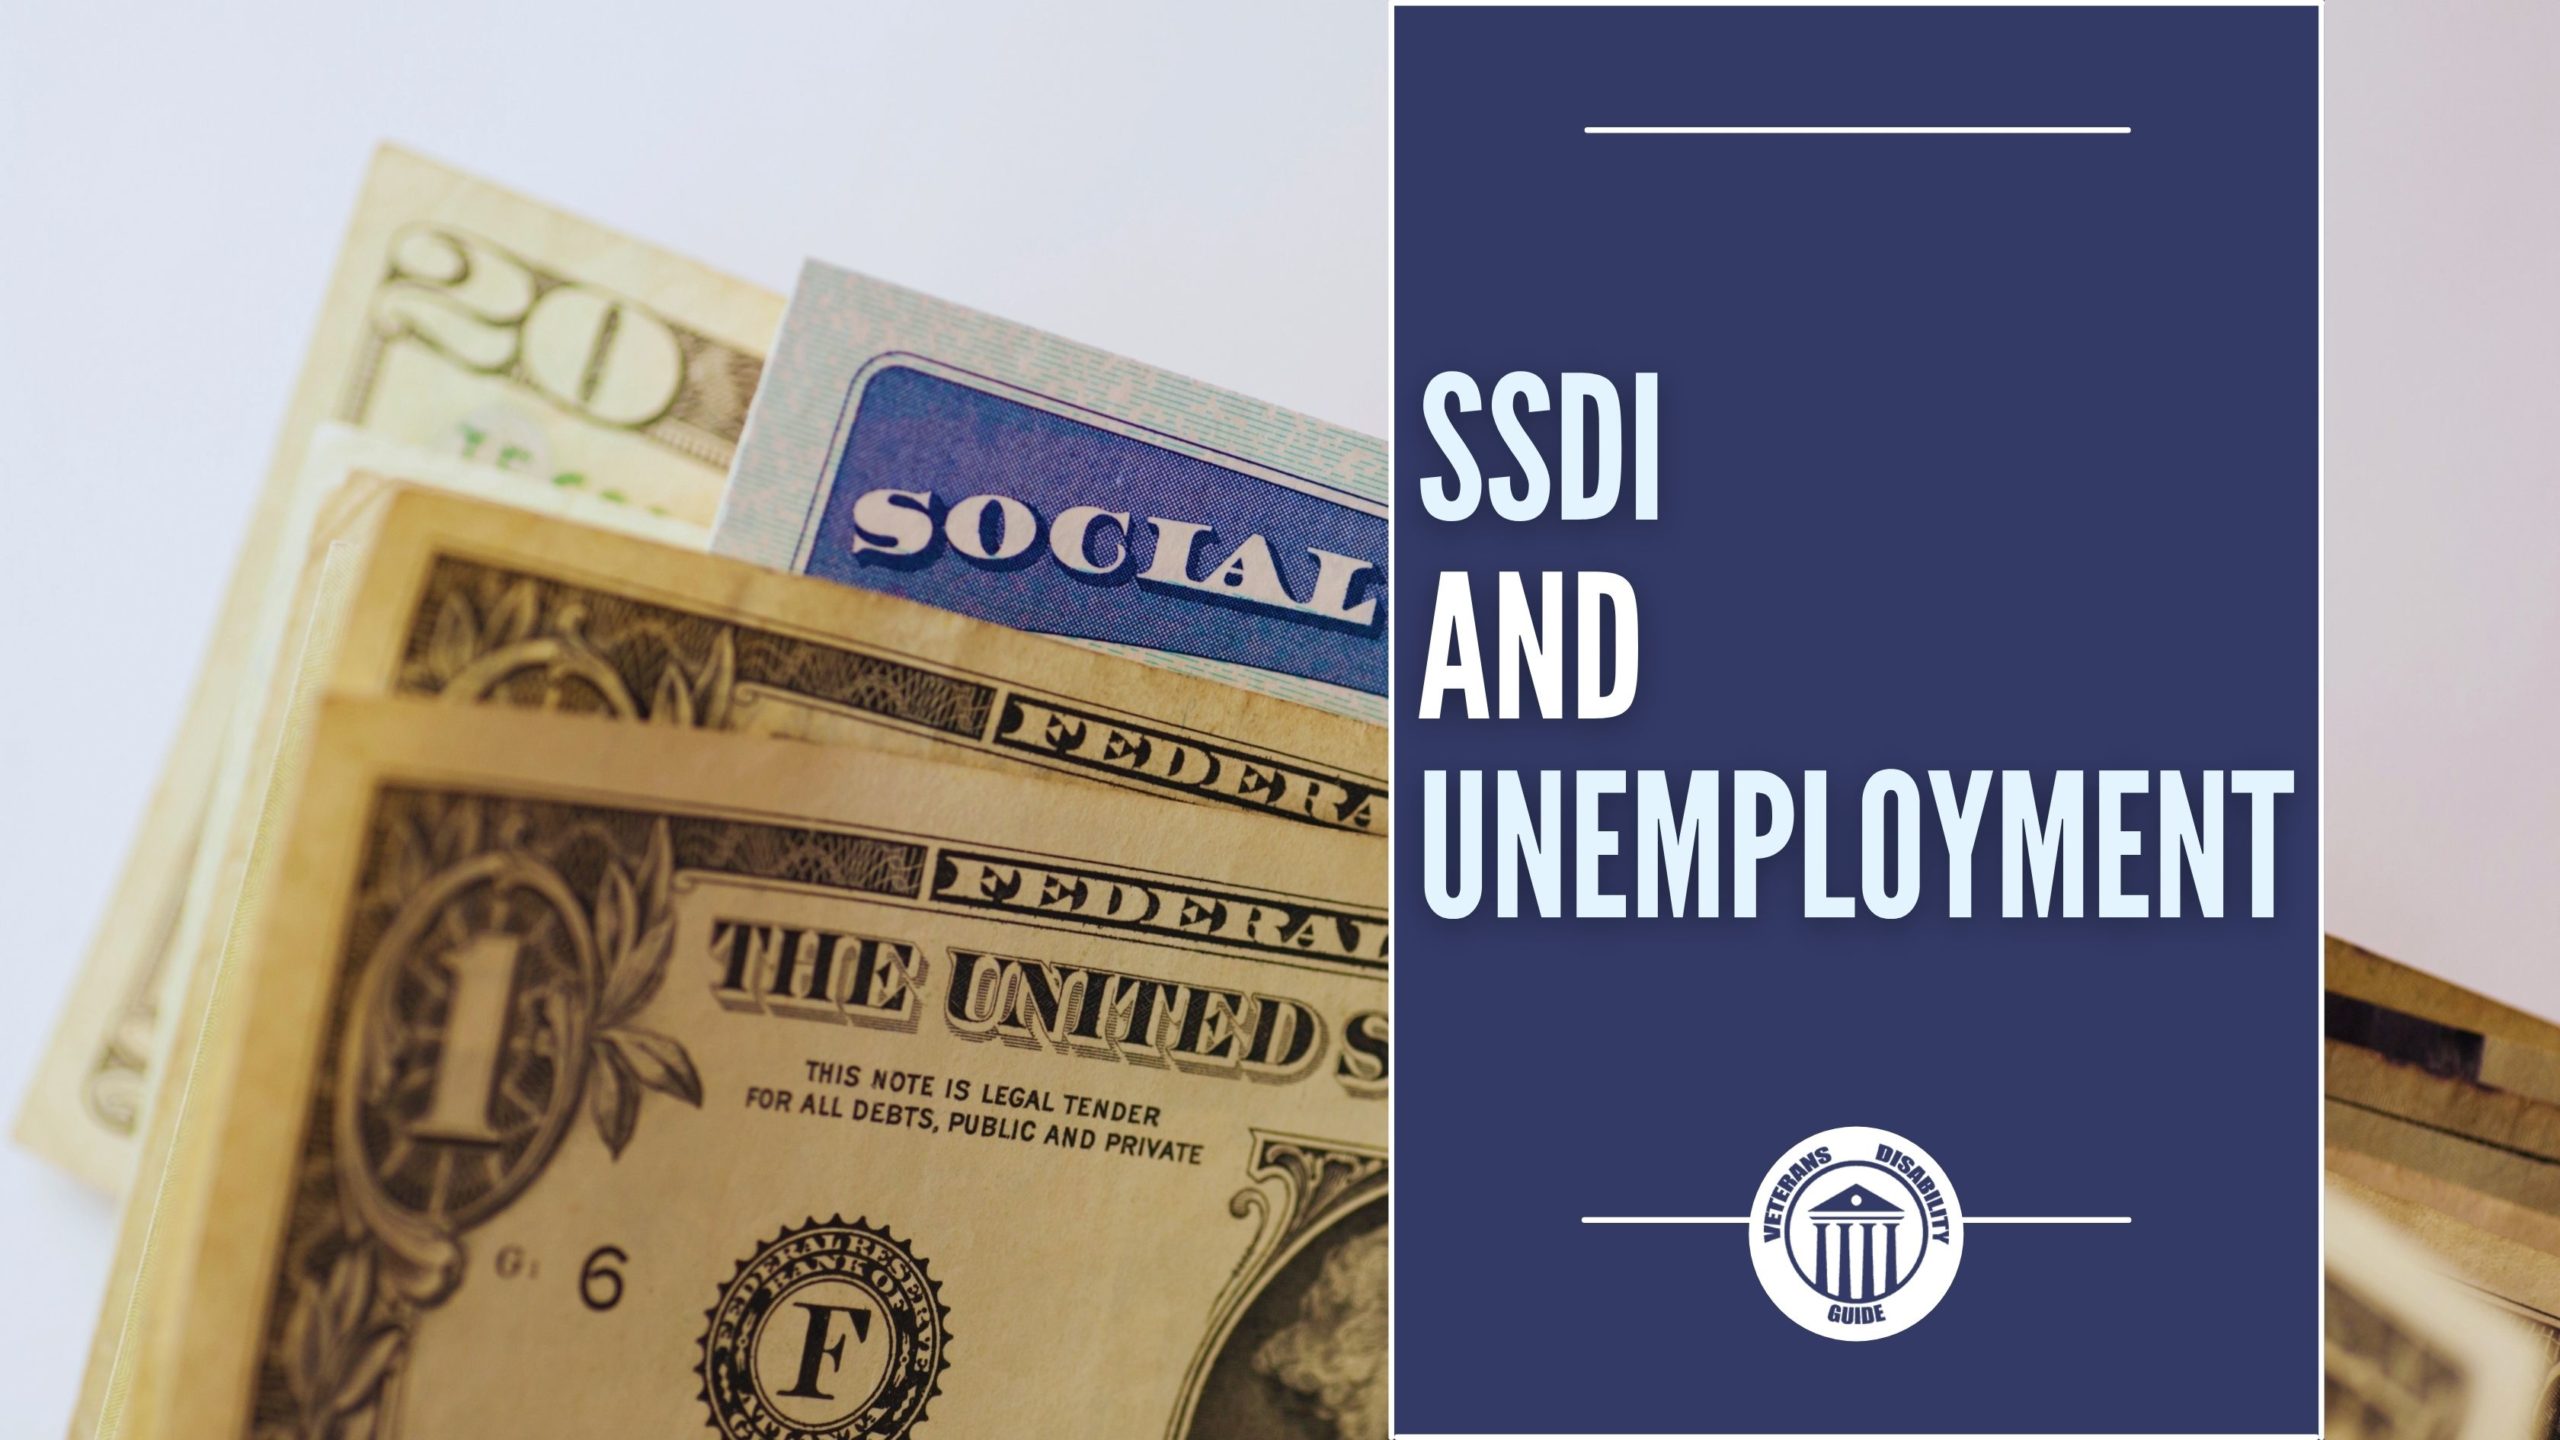 SSDI And Unemployment blog header image